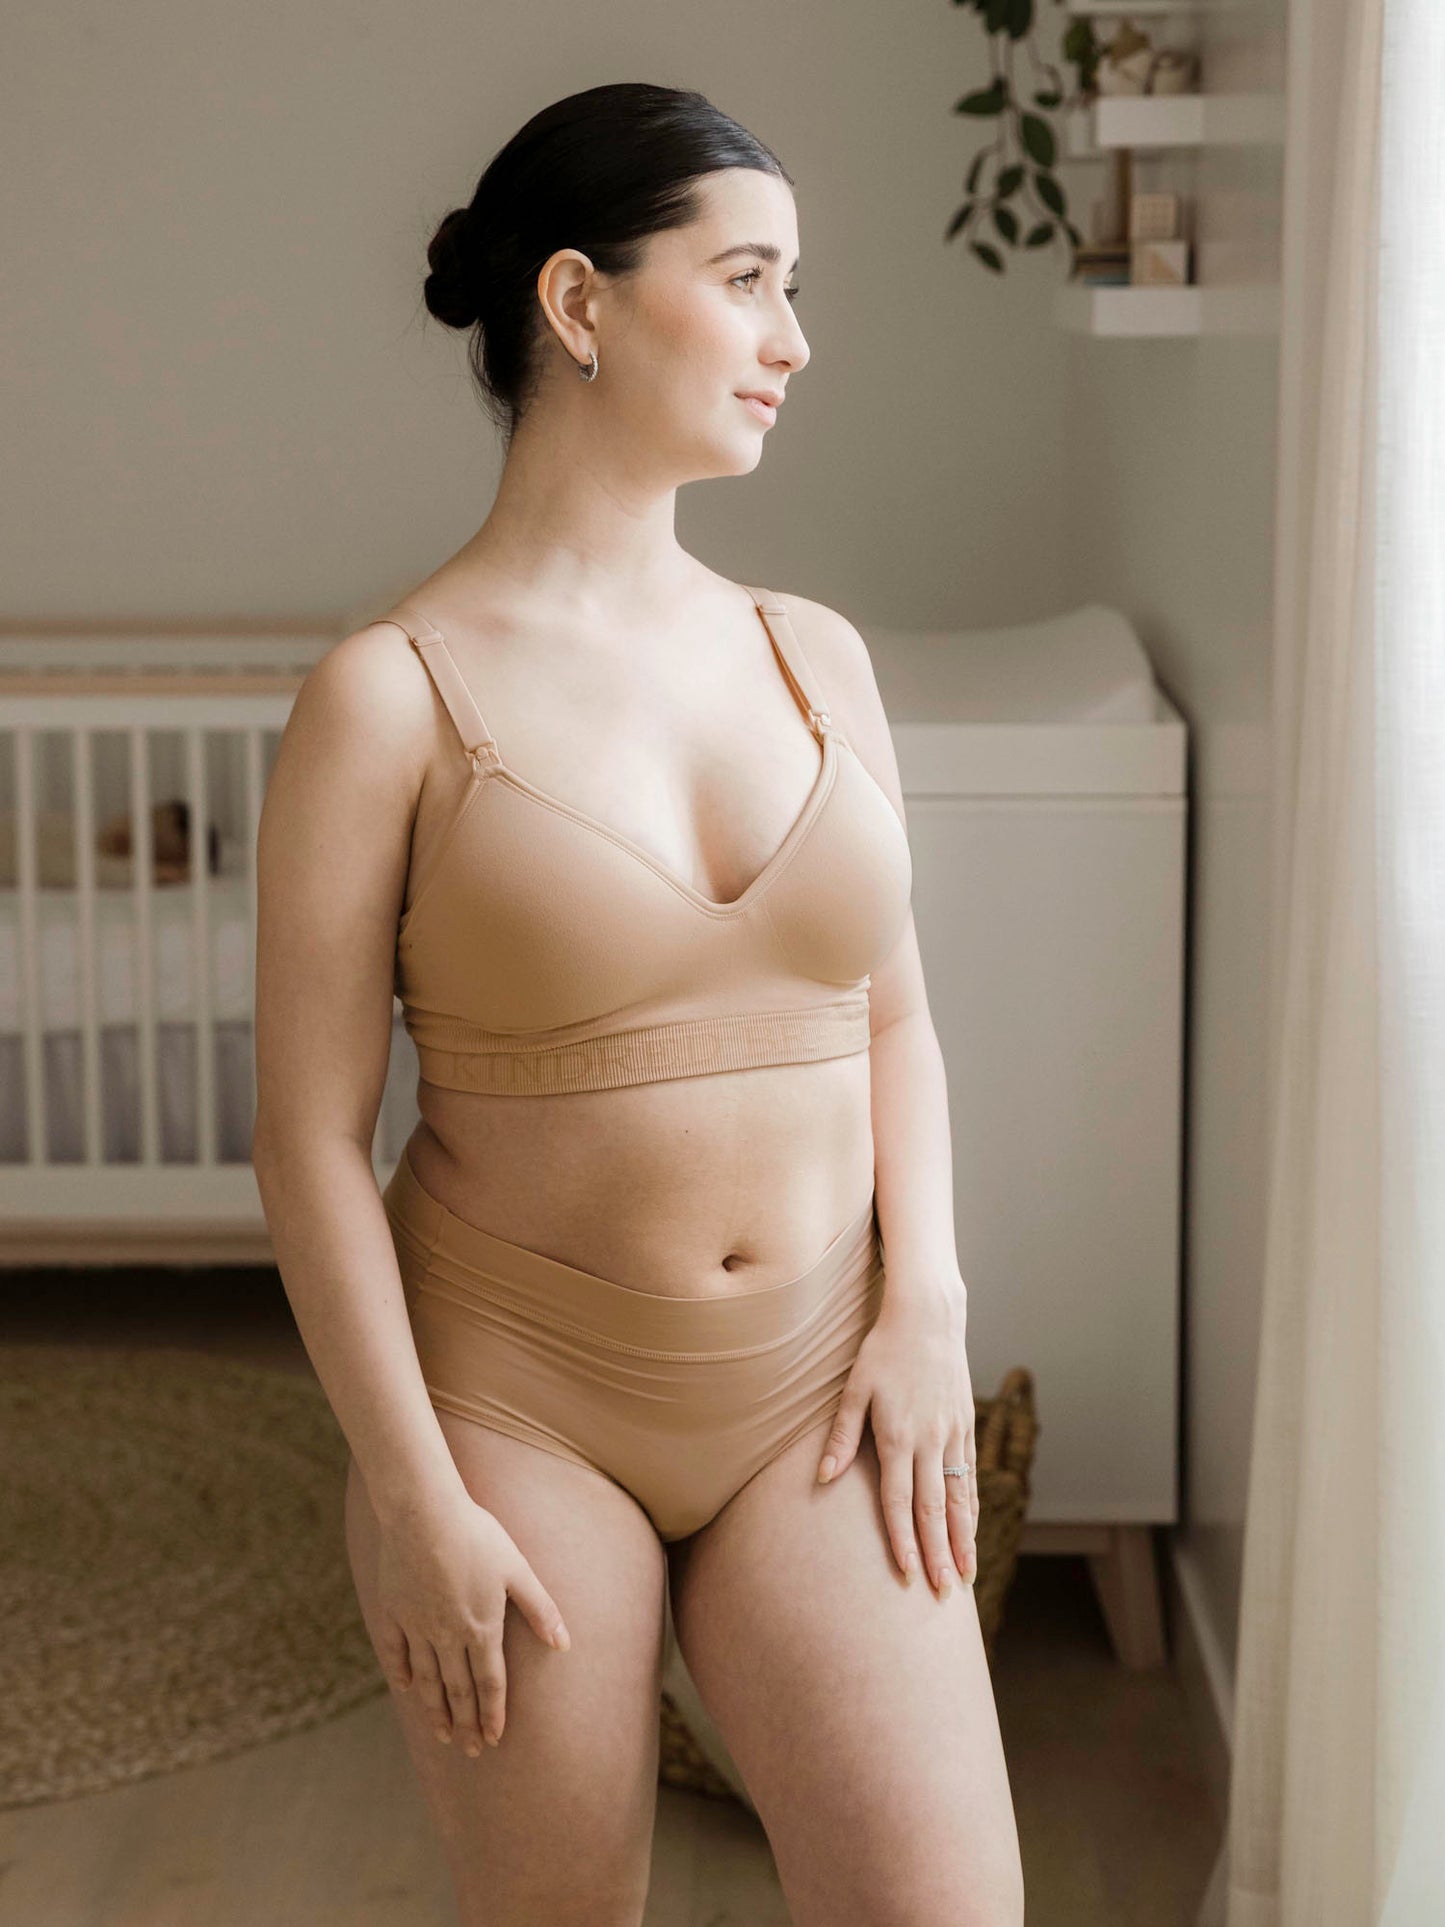 LOVEMÈRE SEAMLESS NURSING BRA(BEIGE), Women's Fashion, Maternity